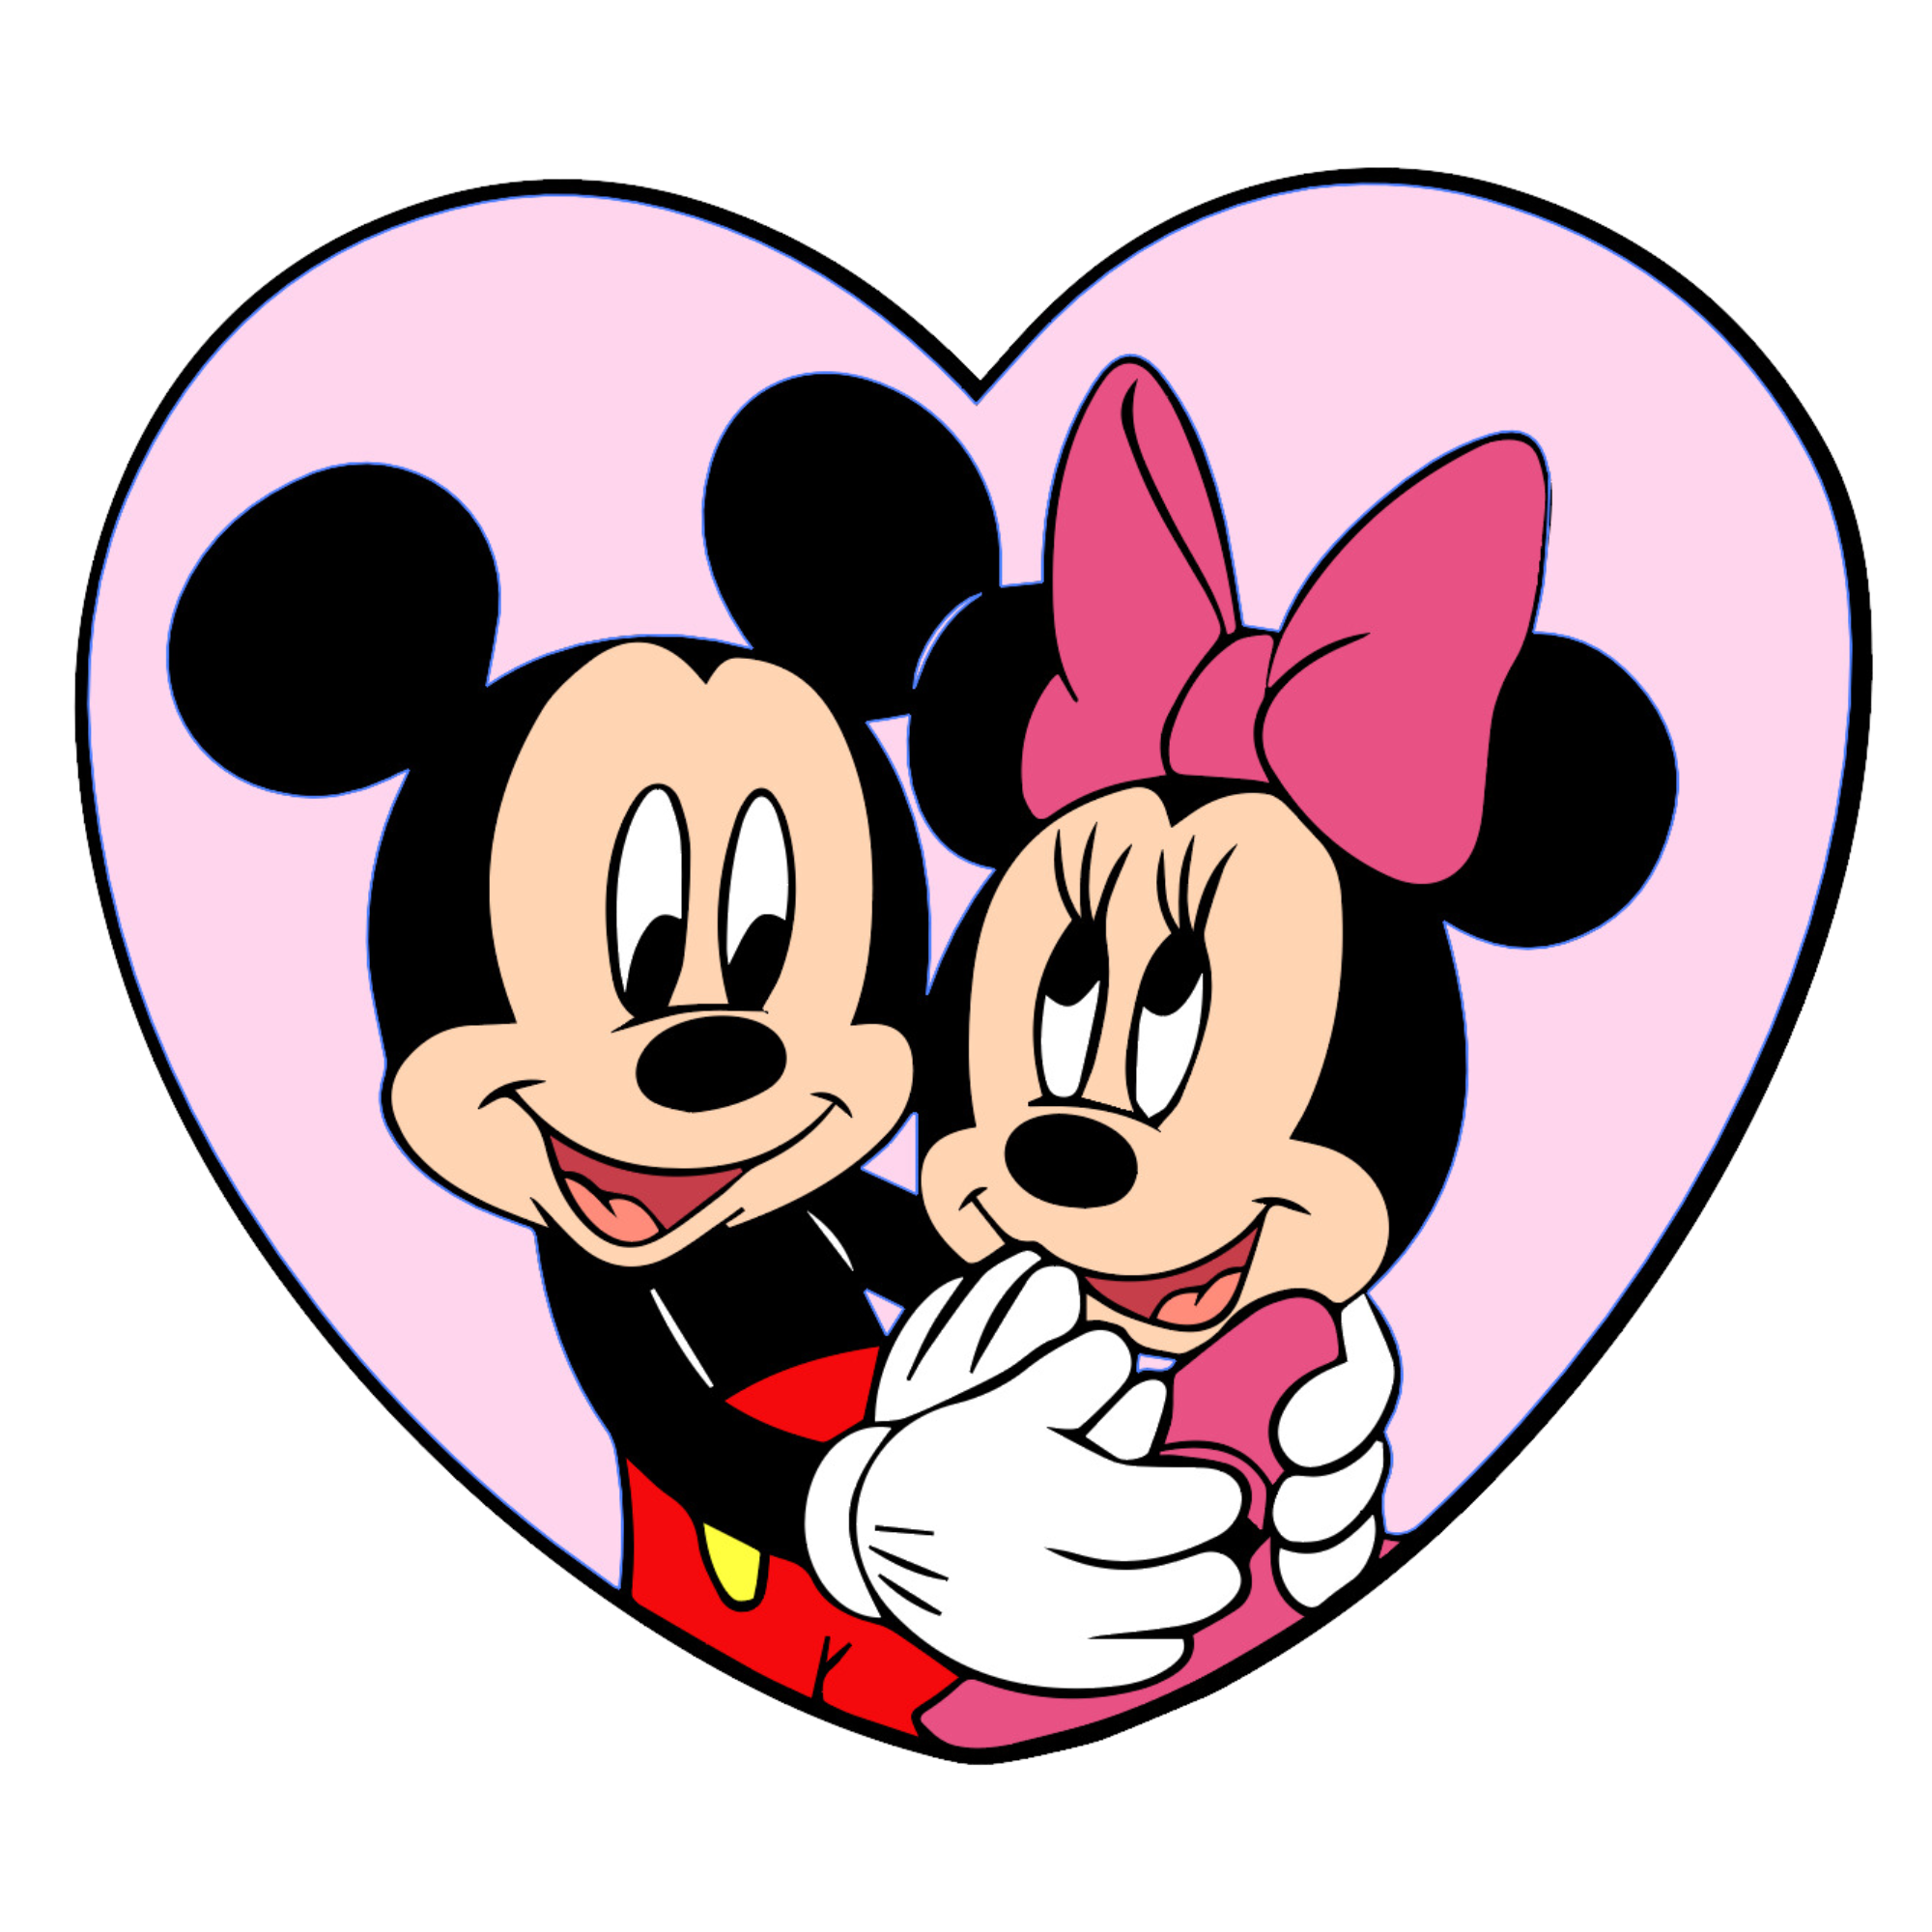 Mickey și Minnie într-o inimă